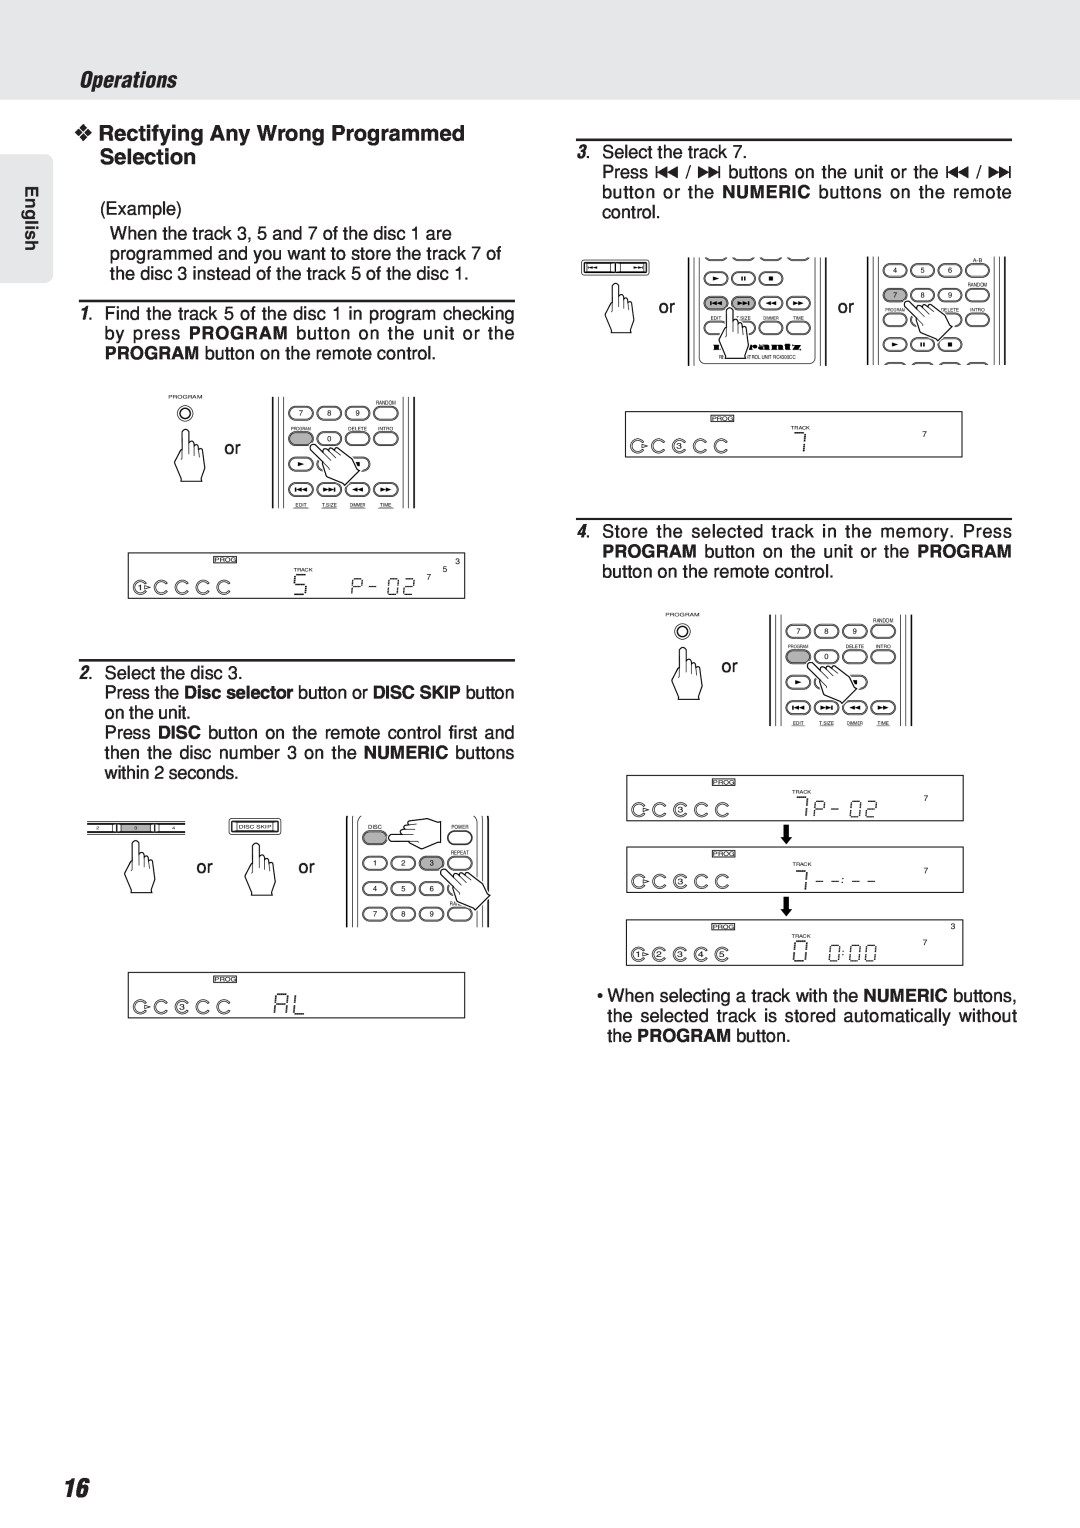 Marantz CC4300N manual Rectifying Any Wrong Programmed Selection, Operations 